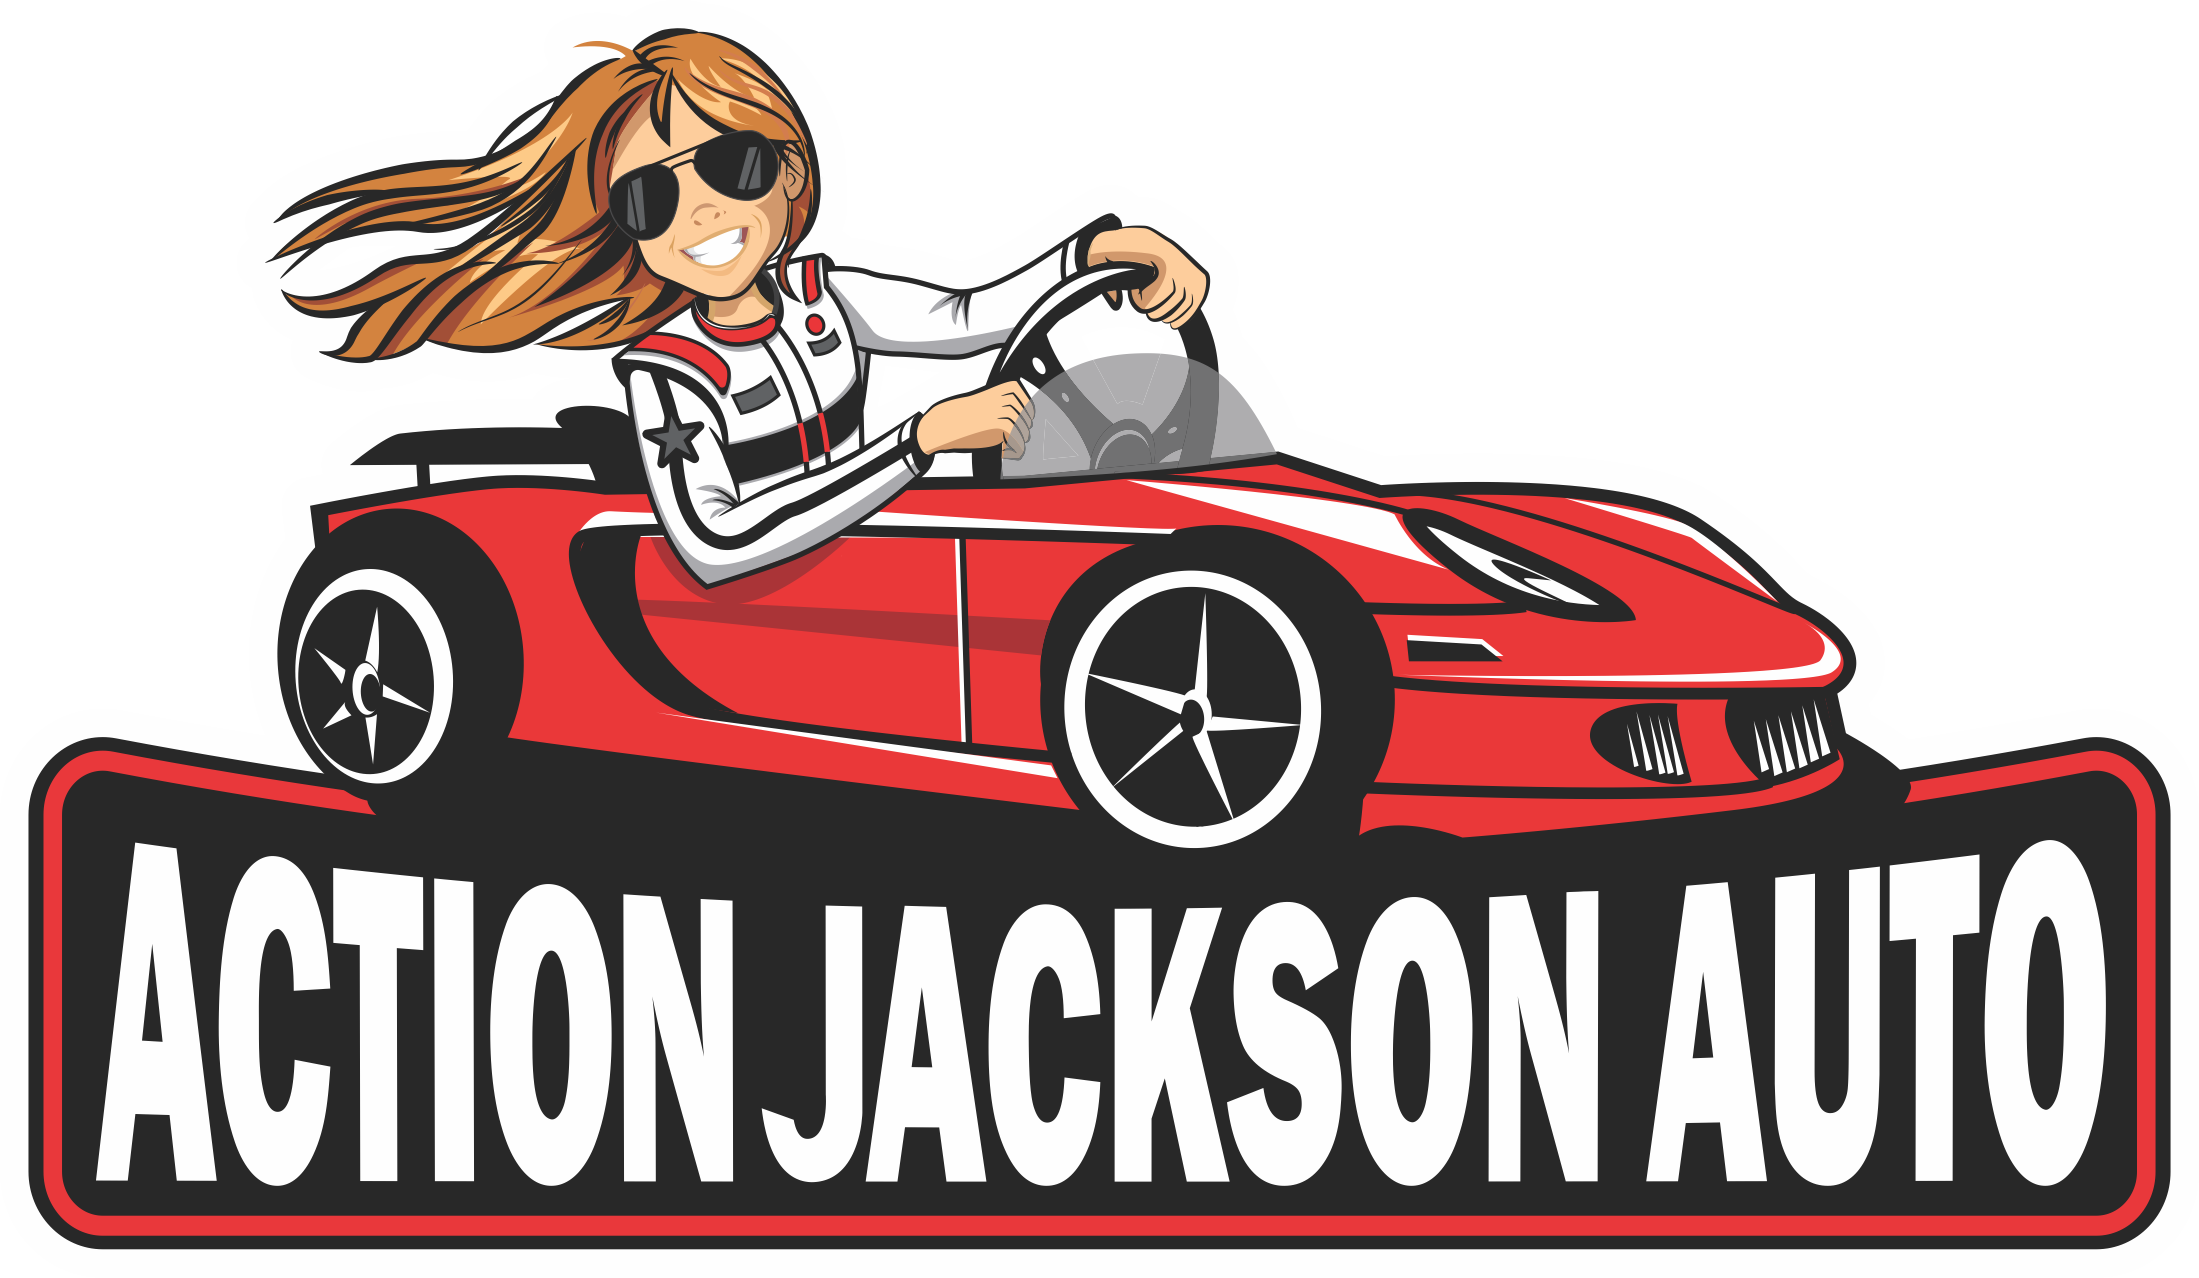 Action Jackson Auto